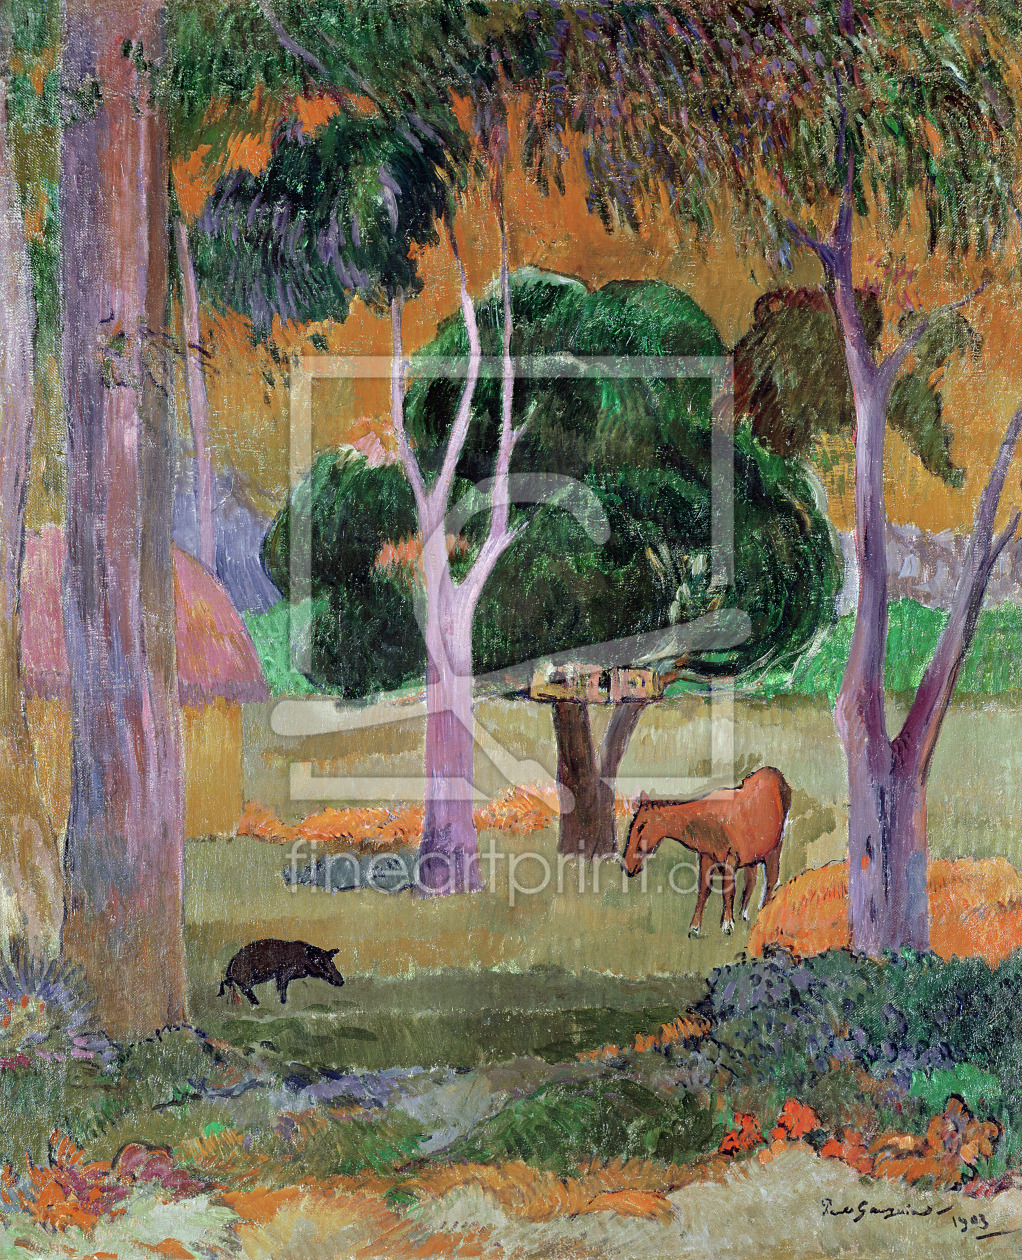 Bild-Nr.: 31000467 Dominican Landscape or, Landscape with a Pig and Horse, 1903 erstellt von Gauguin, Paul